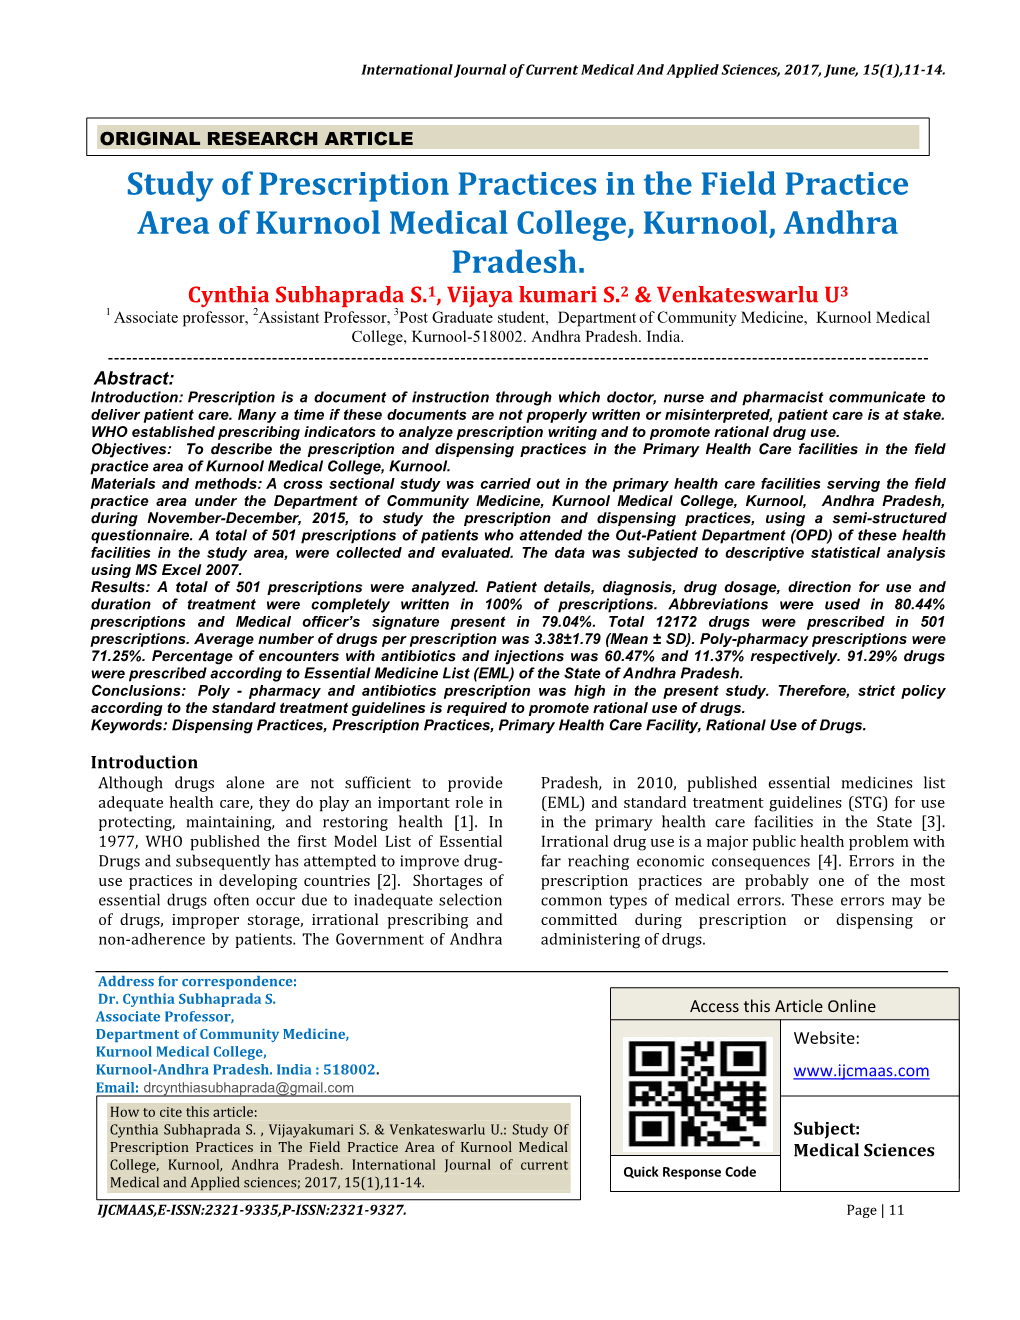 Study of Prescription Practices in the Field Practice Area of Kurnool Medical College, Kurnool, Andhra Pradesh